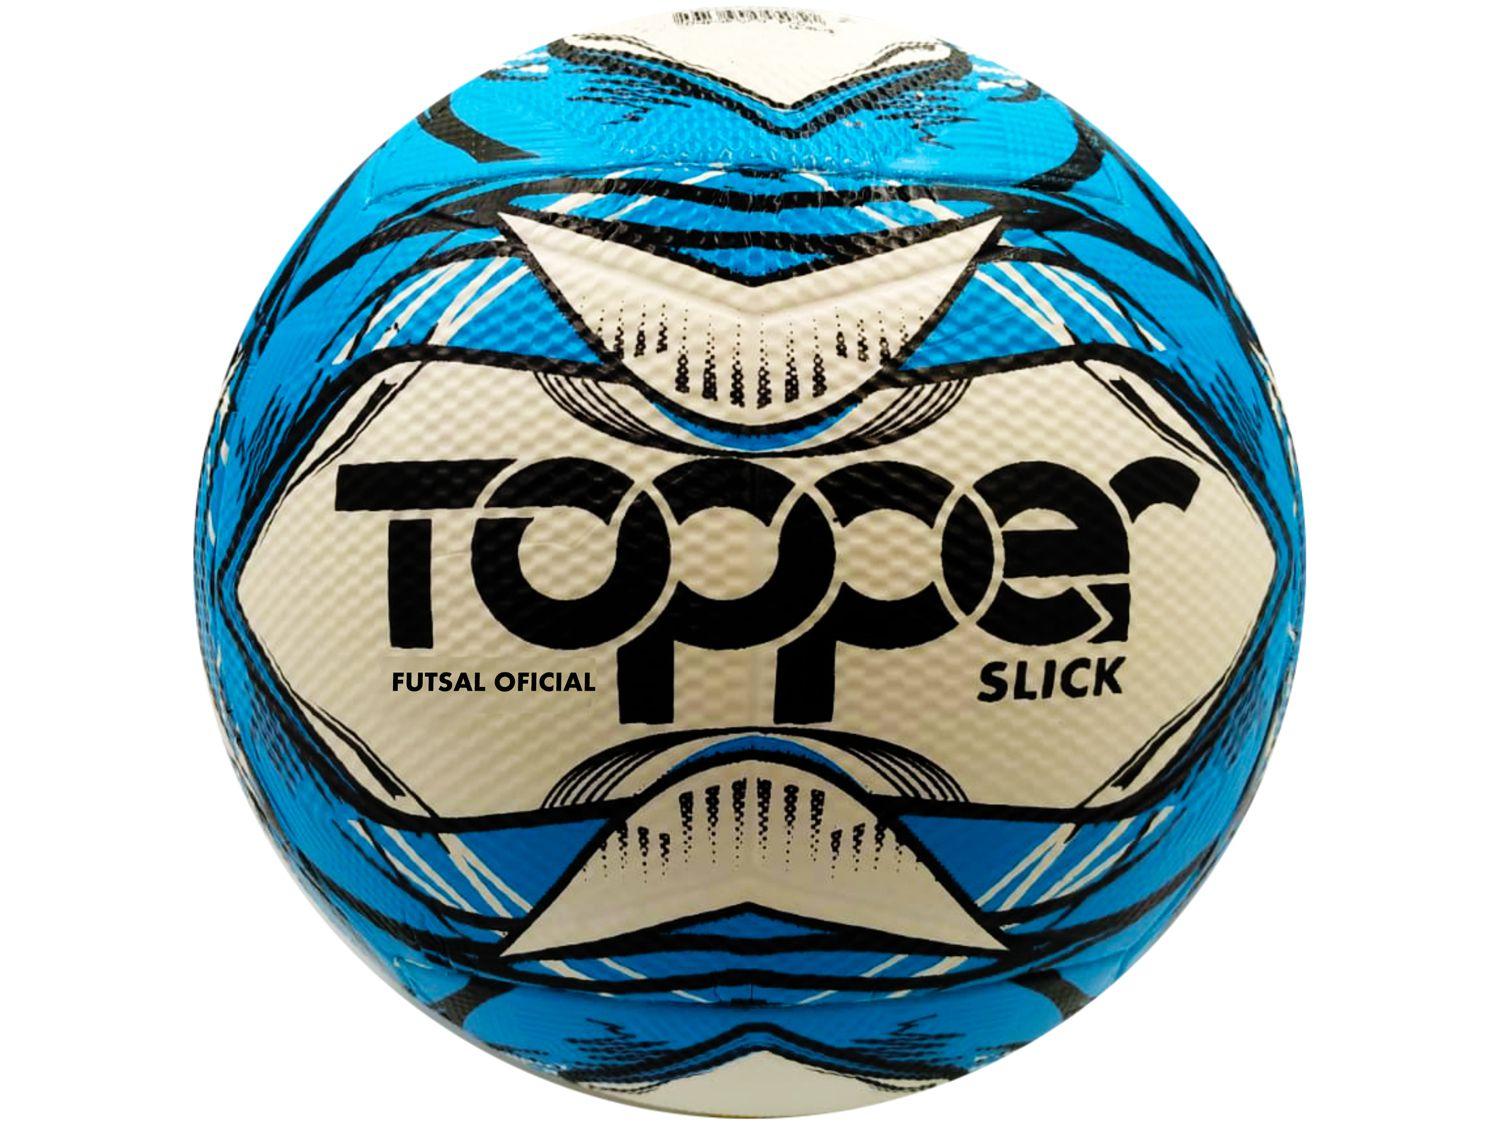 Bola de Futsal Topper Slick 2021 Oficial